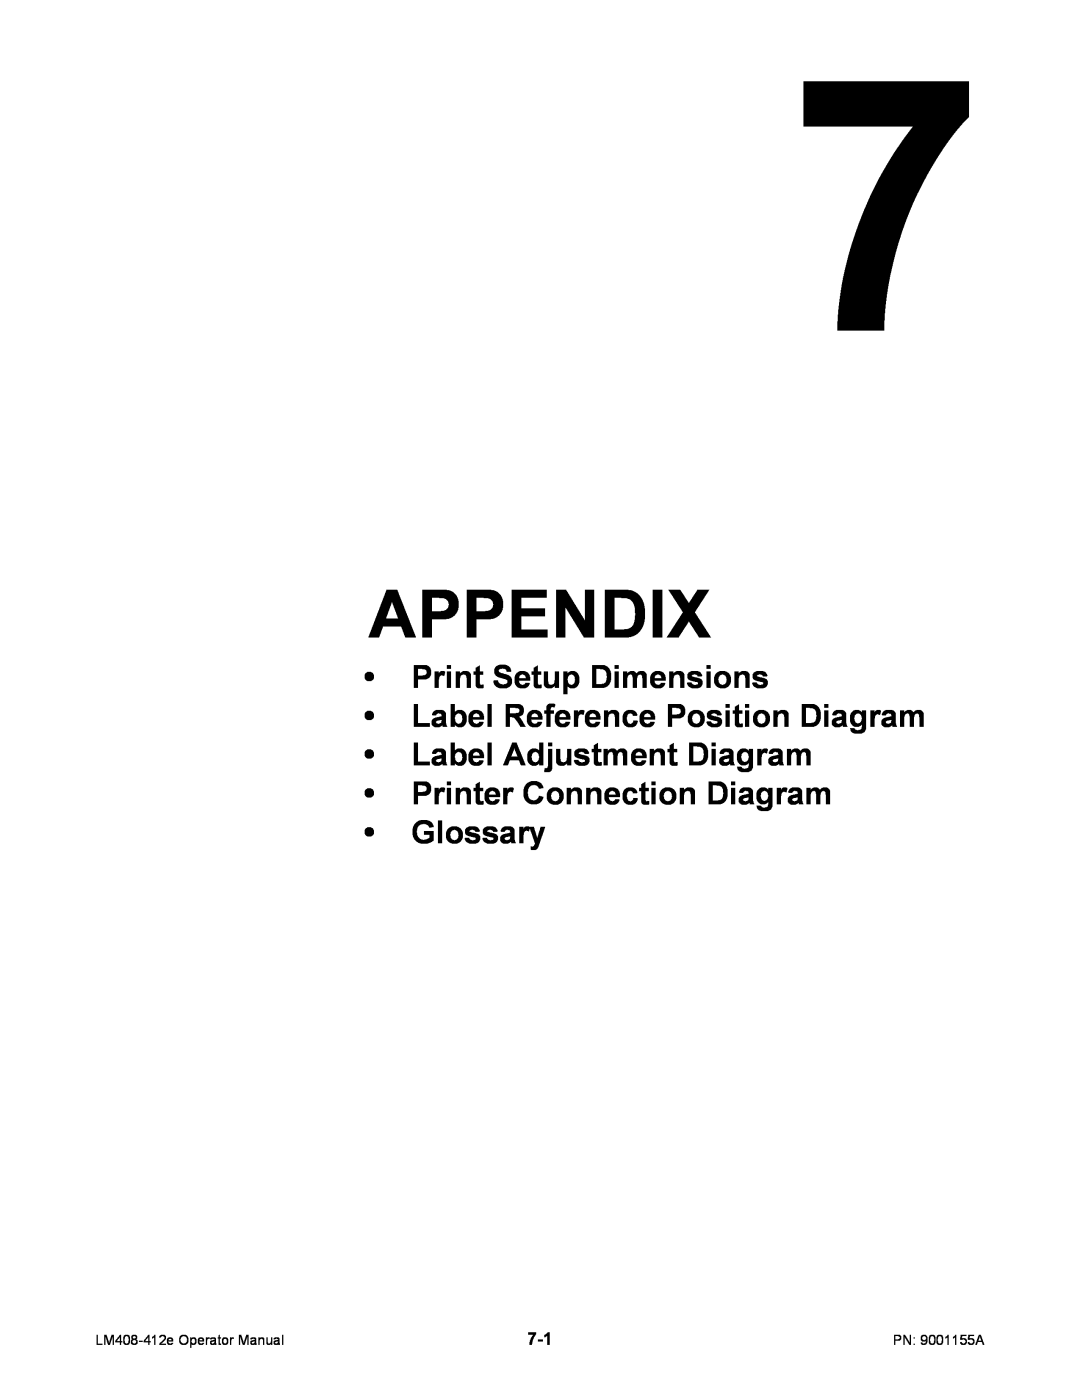 SATO LM408/412E manual Appendix, Print Setup Dimensions Label Reference Position Diagram 